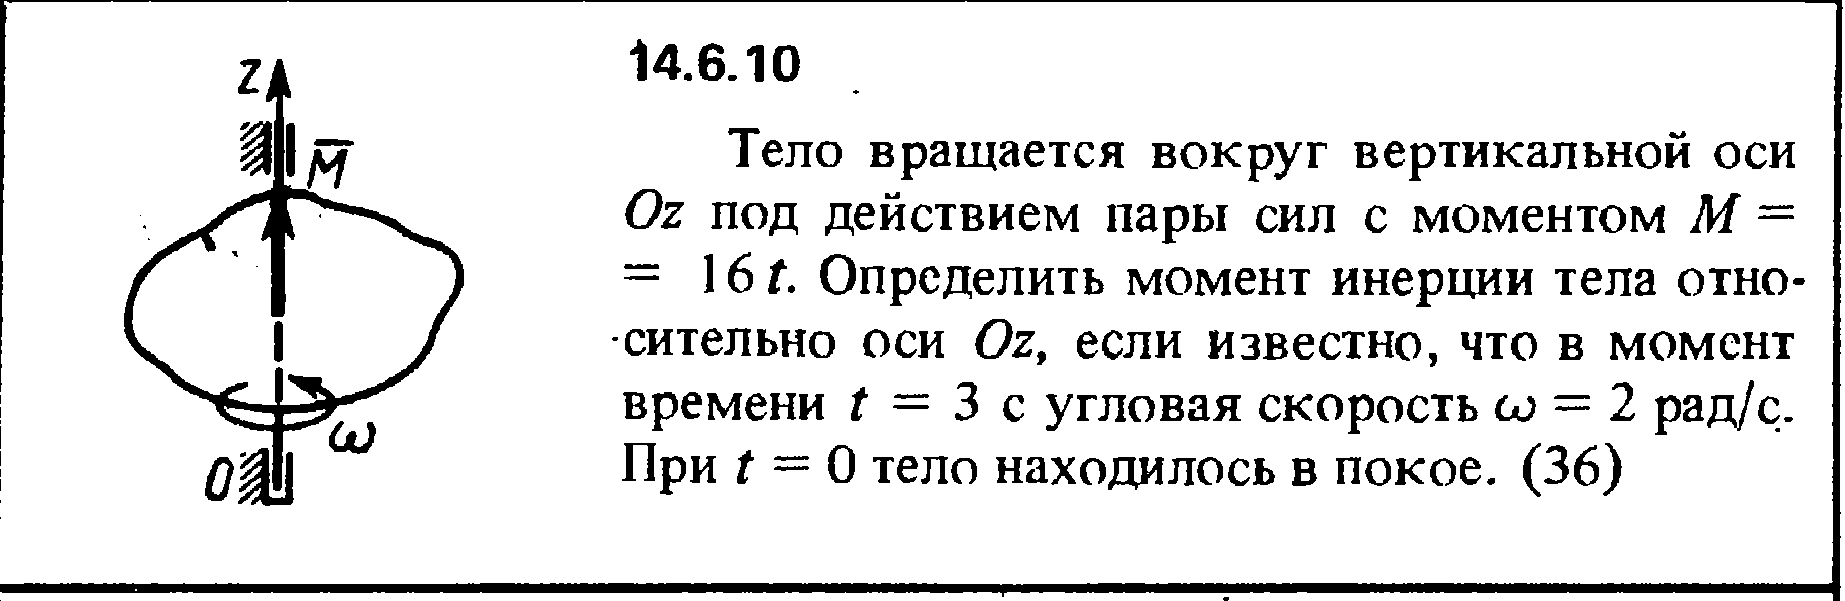 Решение задачи 14.6.10 из сборника Кепе О.Е. 1989 года